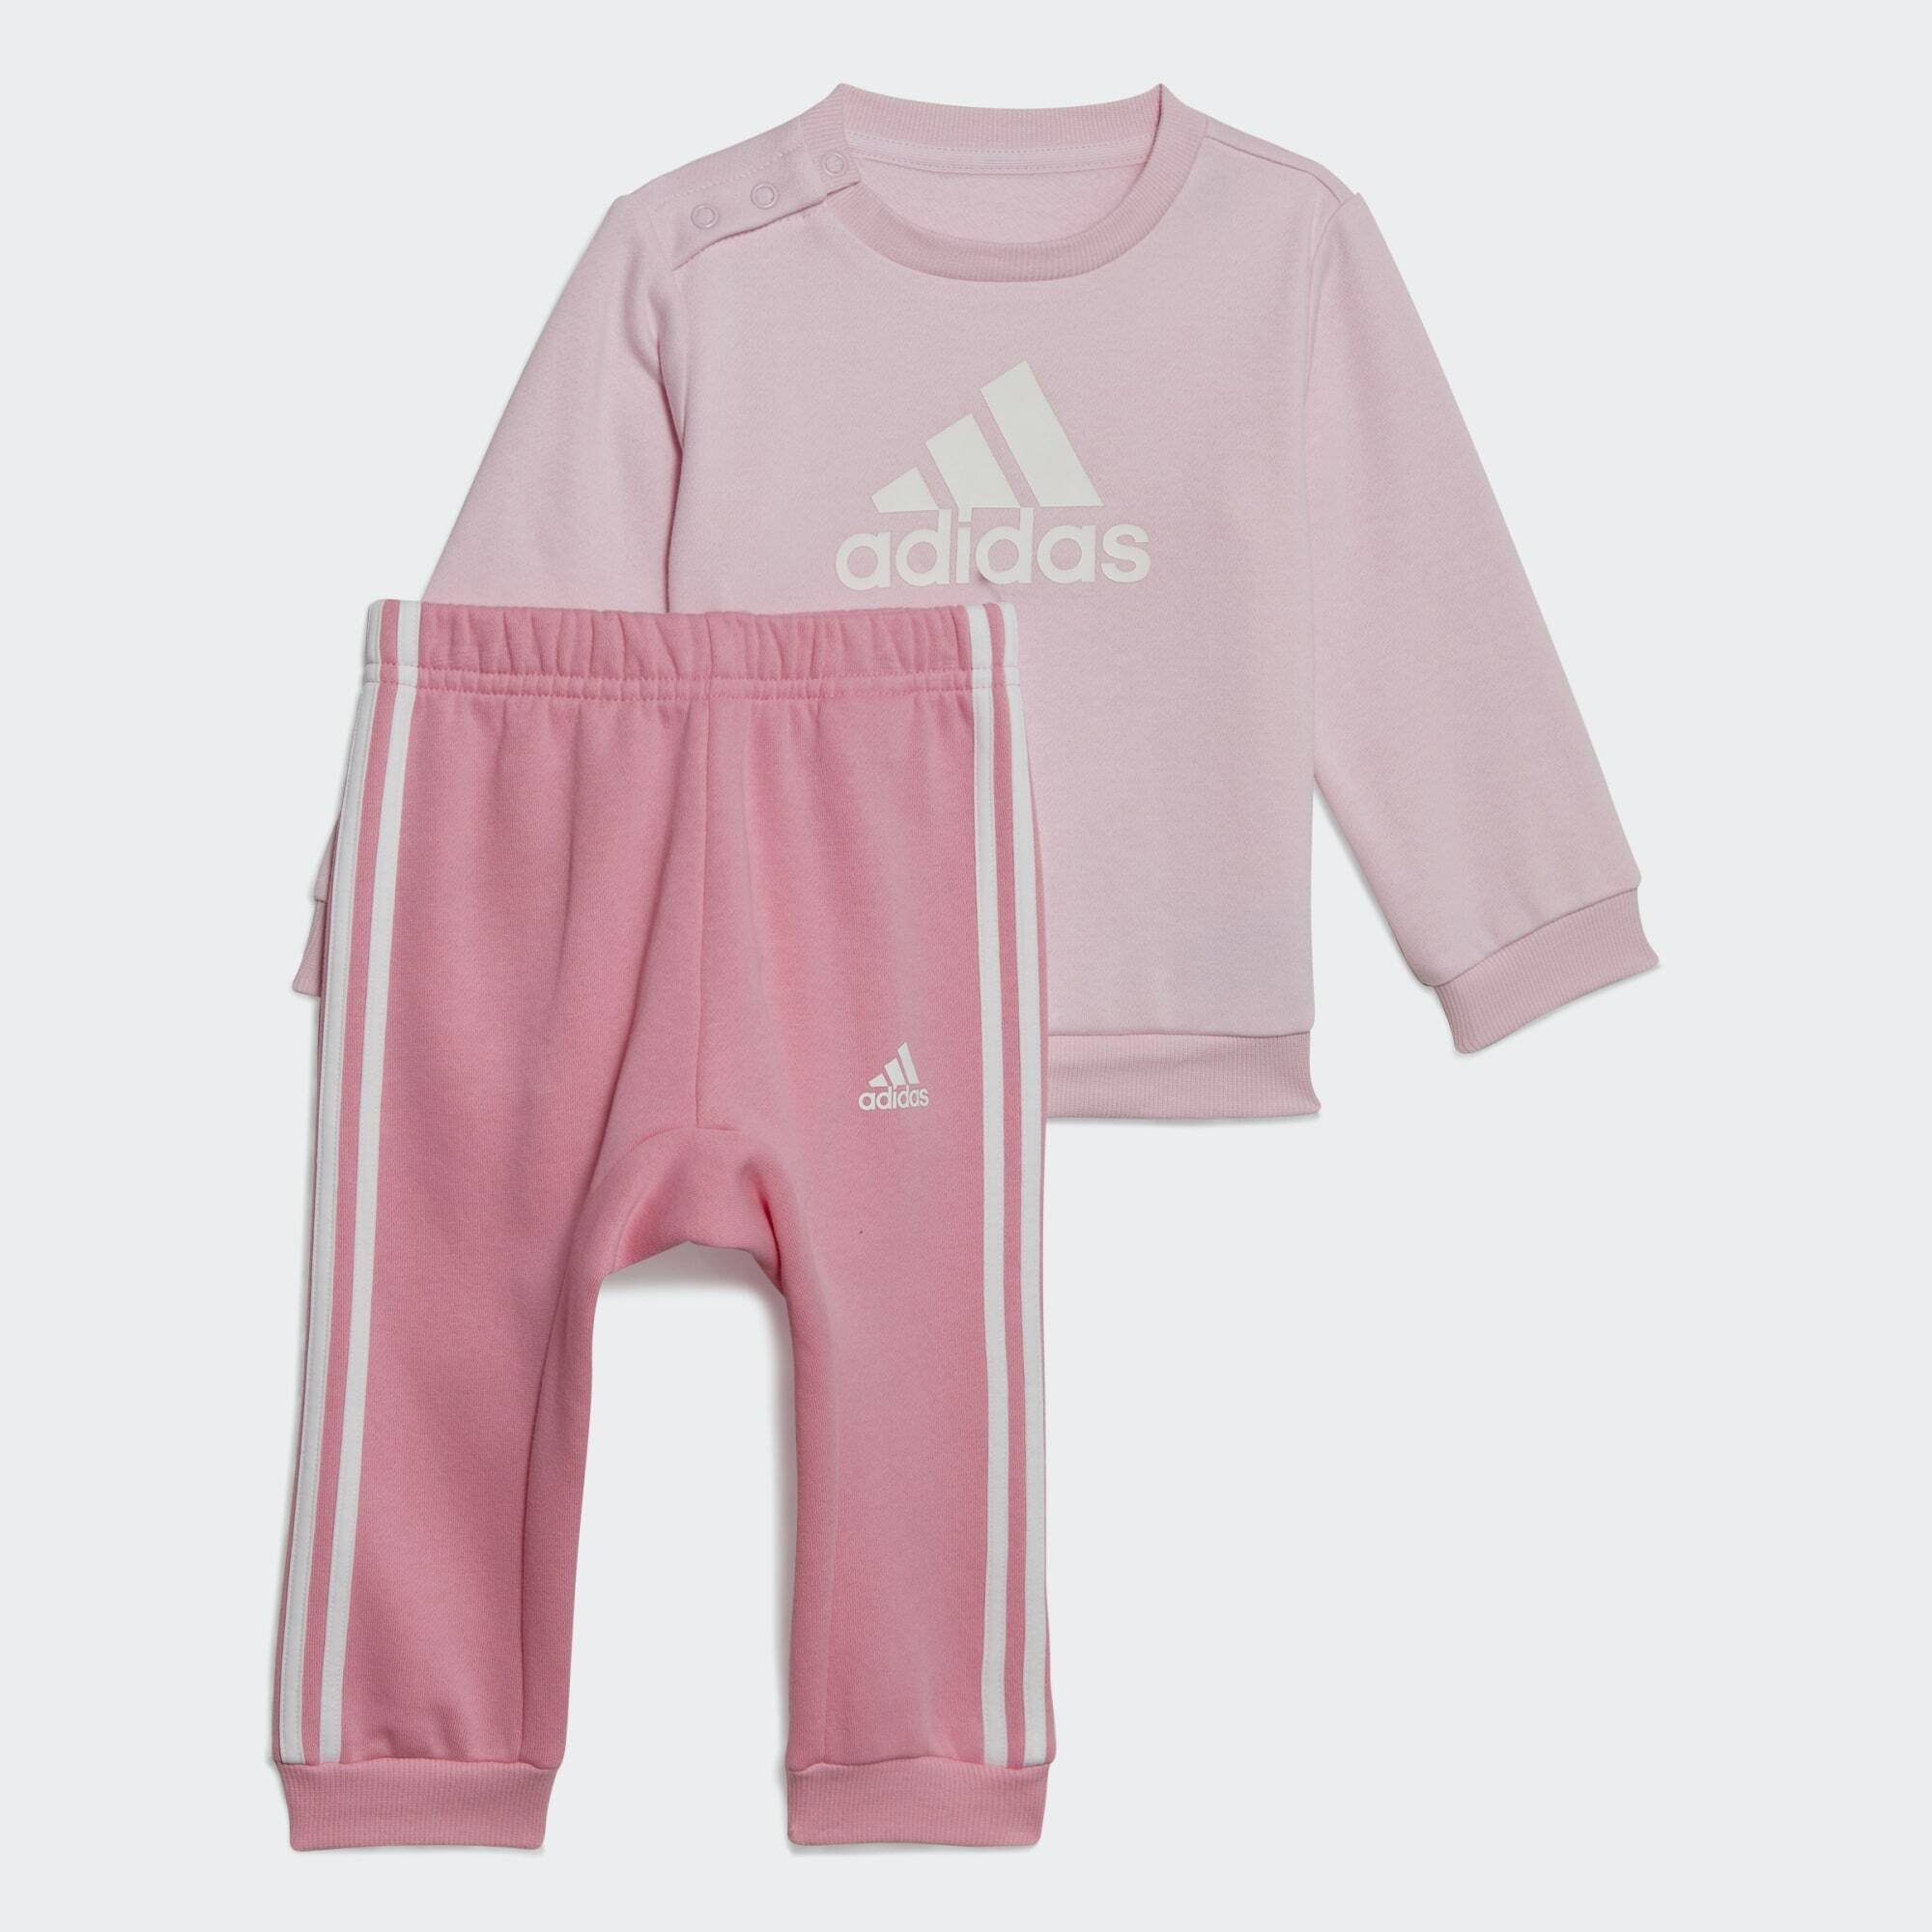 OF adidas / BADGE Clear White SPORT JOGGINGANZUG Sportswear Trainingsanzug Pink